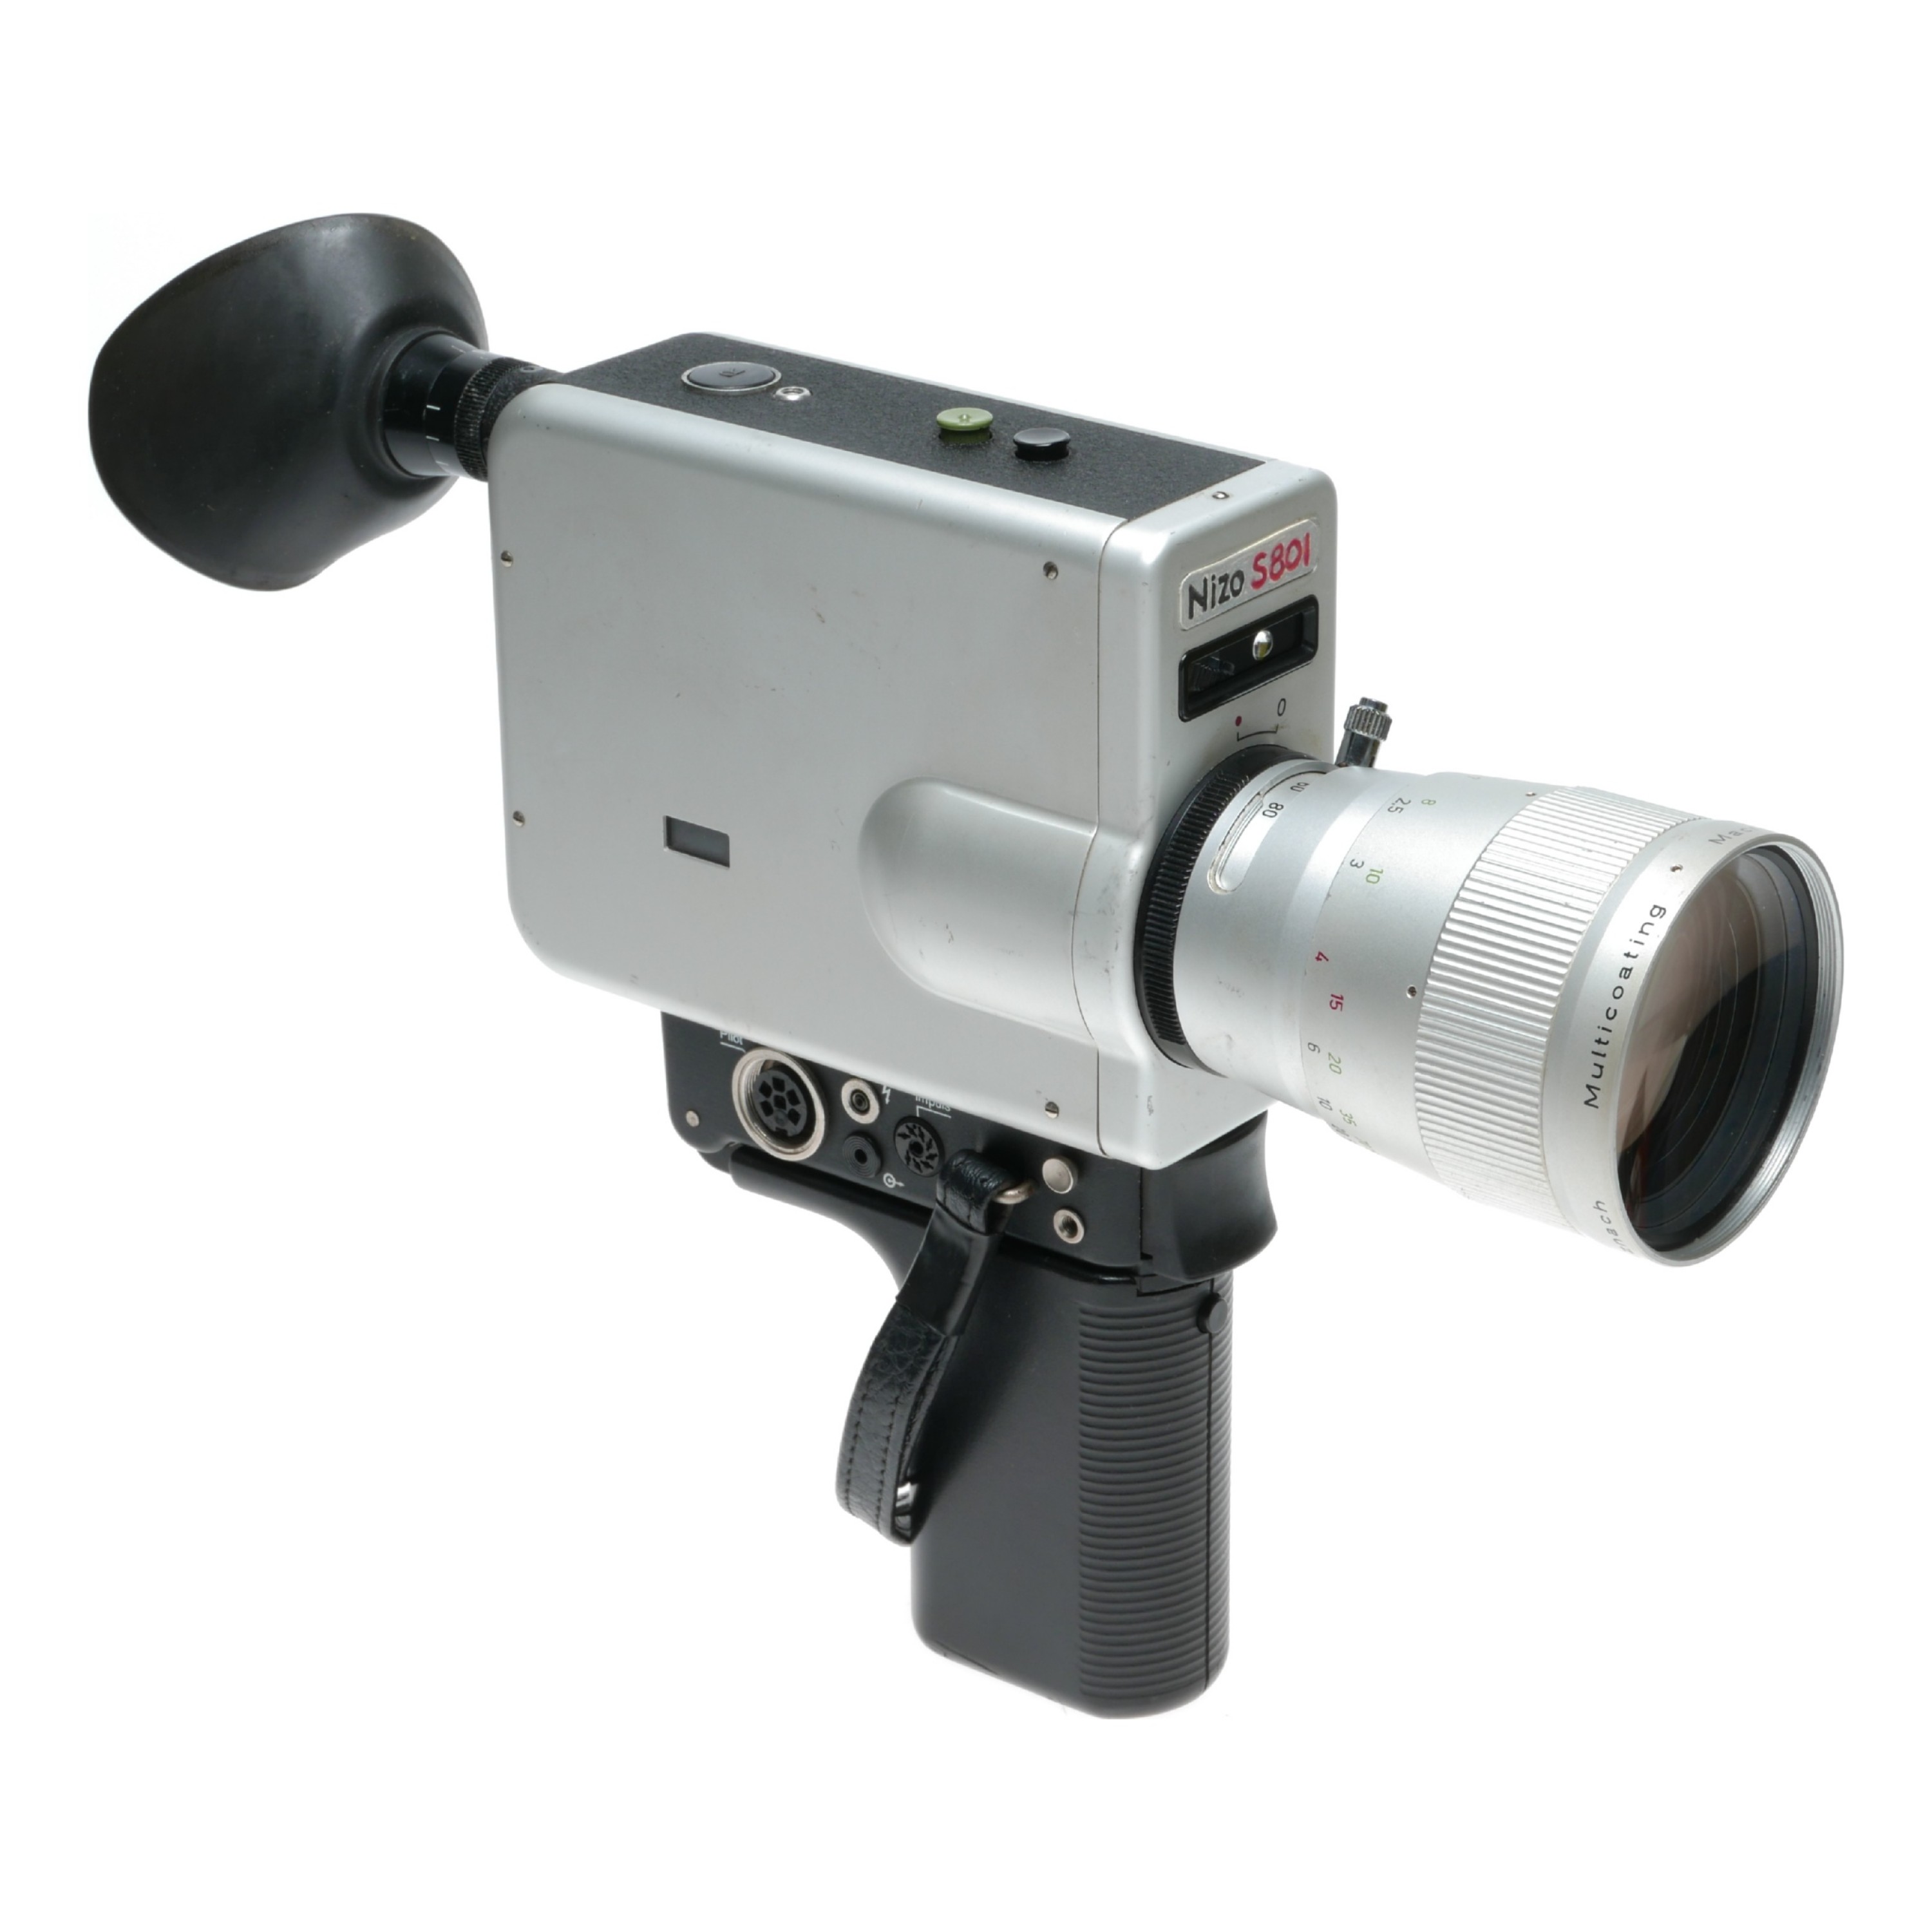 Nizo S801 Super 8 Movie Camera Schneider Macro Variogon 1.8/7-80